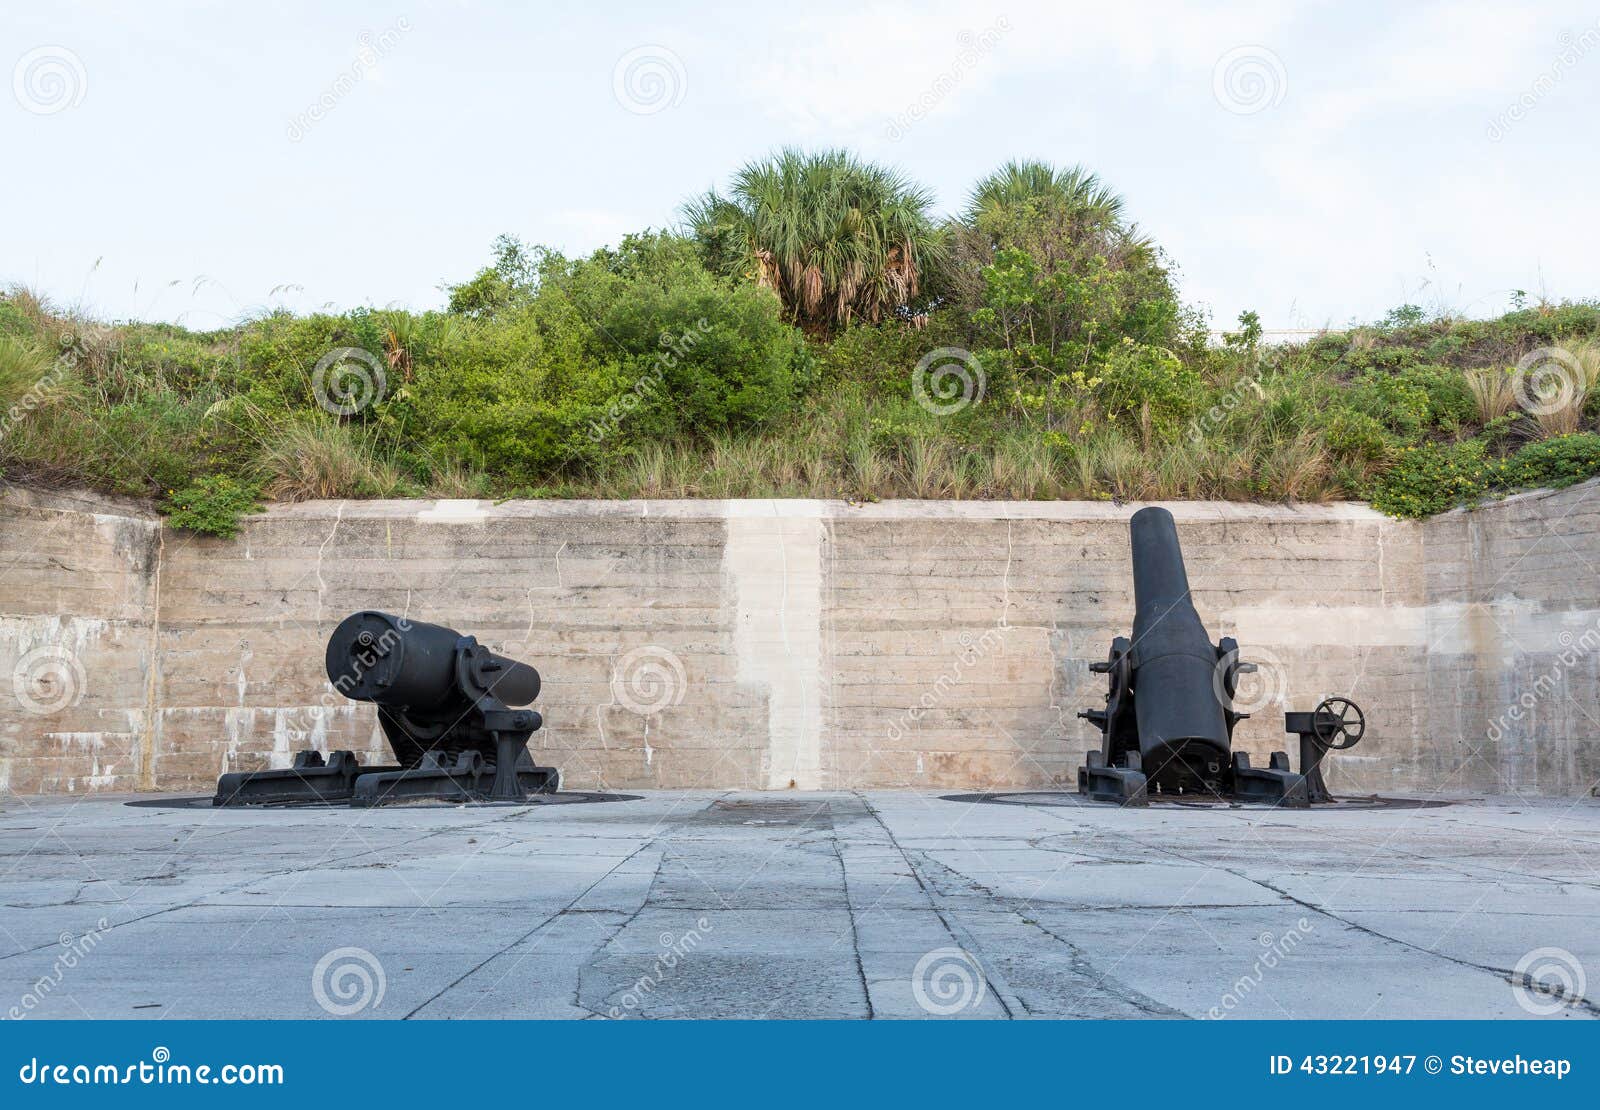 old artillery guns at fort de soto florida